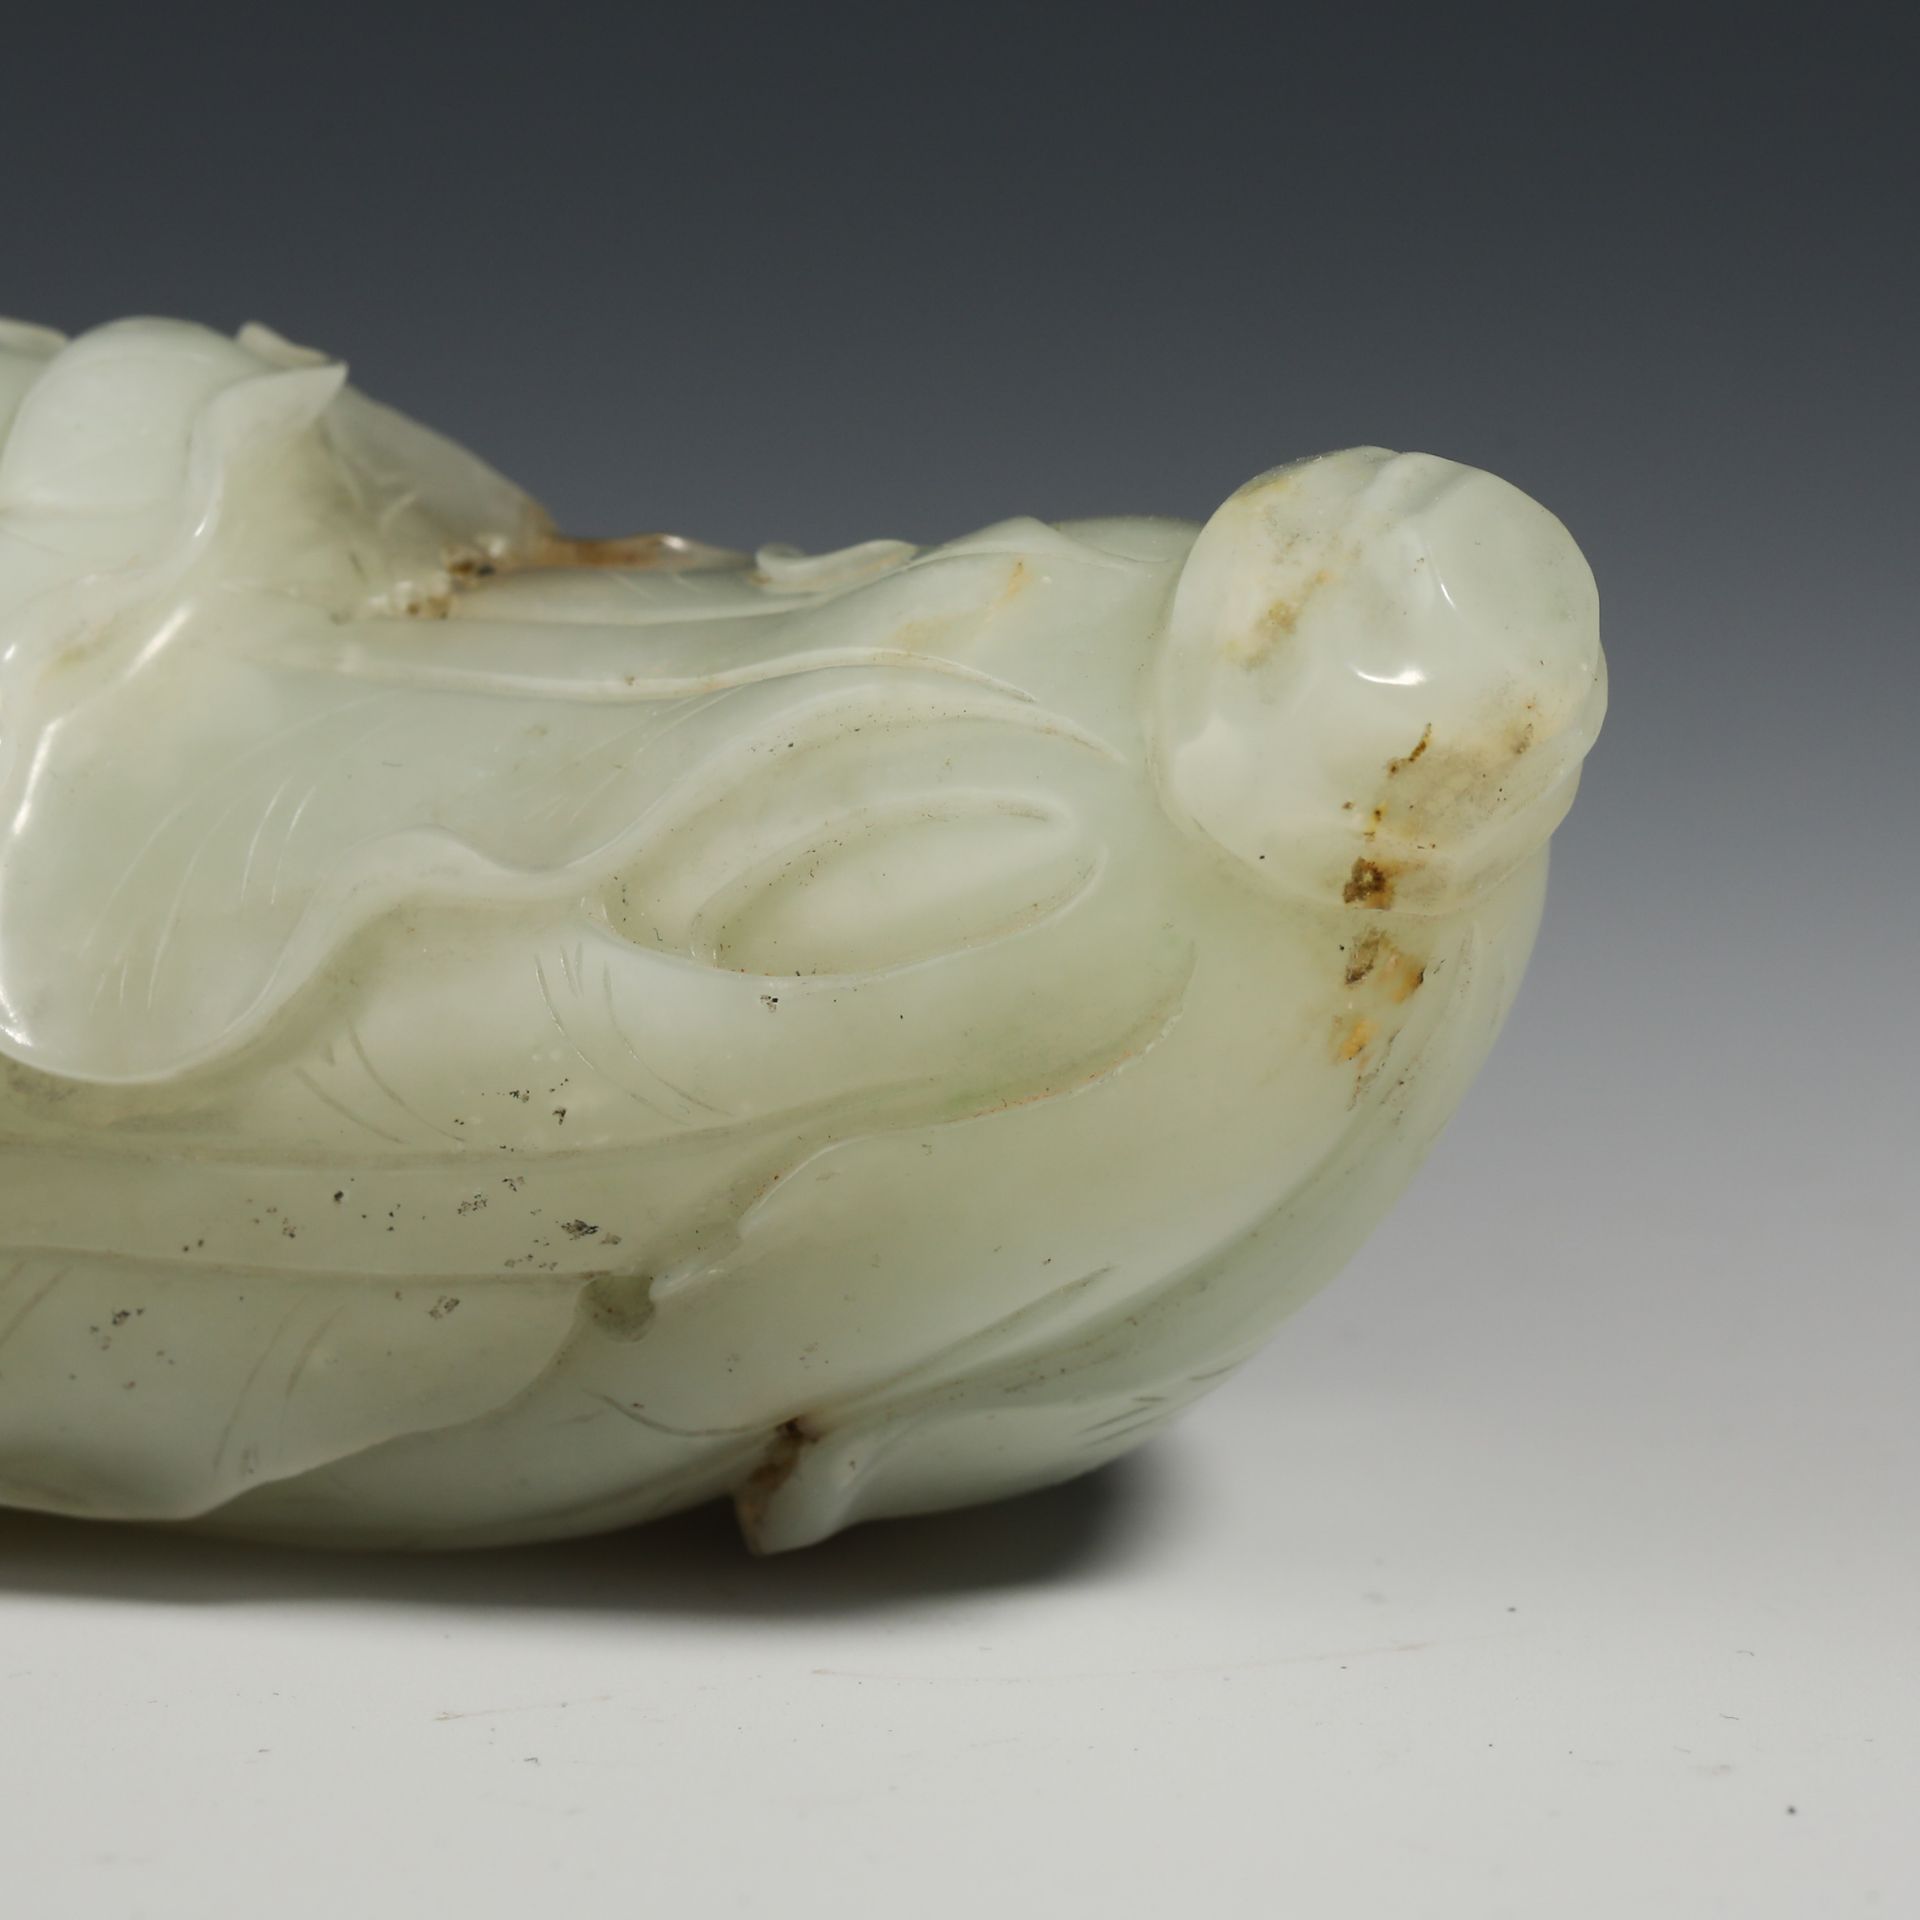 Qing Dynasty Hetian jade ornaments - Image 7 of 7